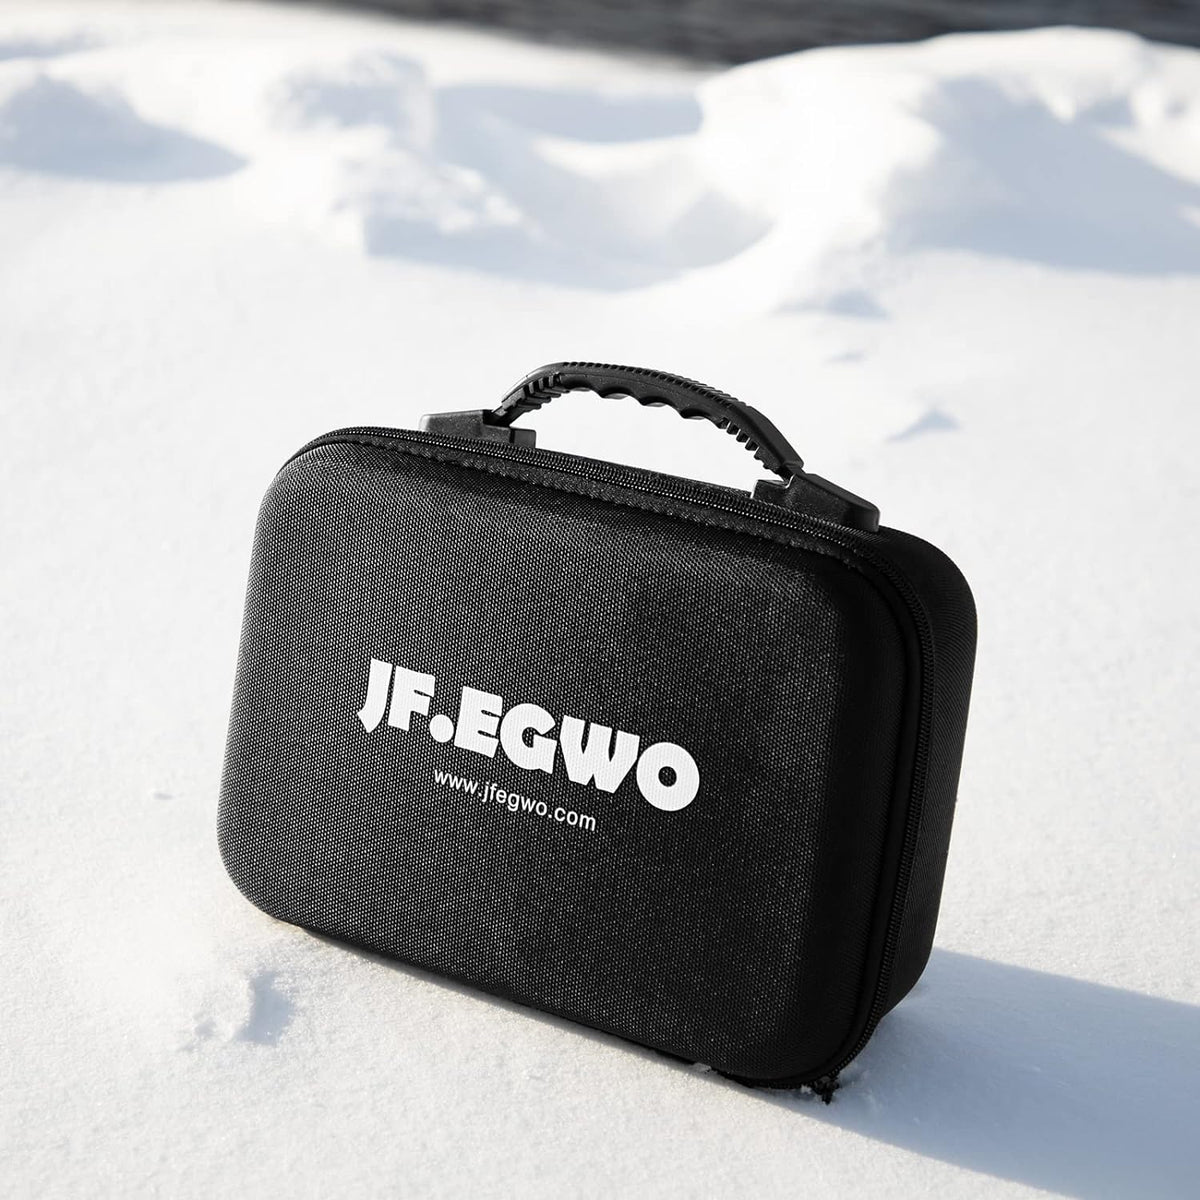 JF.EGWO Portable Hardage Storage Car Case Gadgets Carry Bag fyrir 4000A og 6000A Lithium stjörnunar.